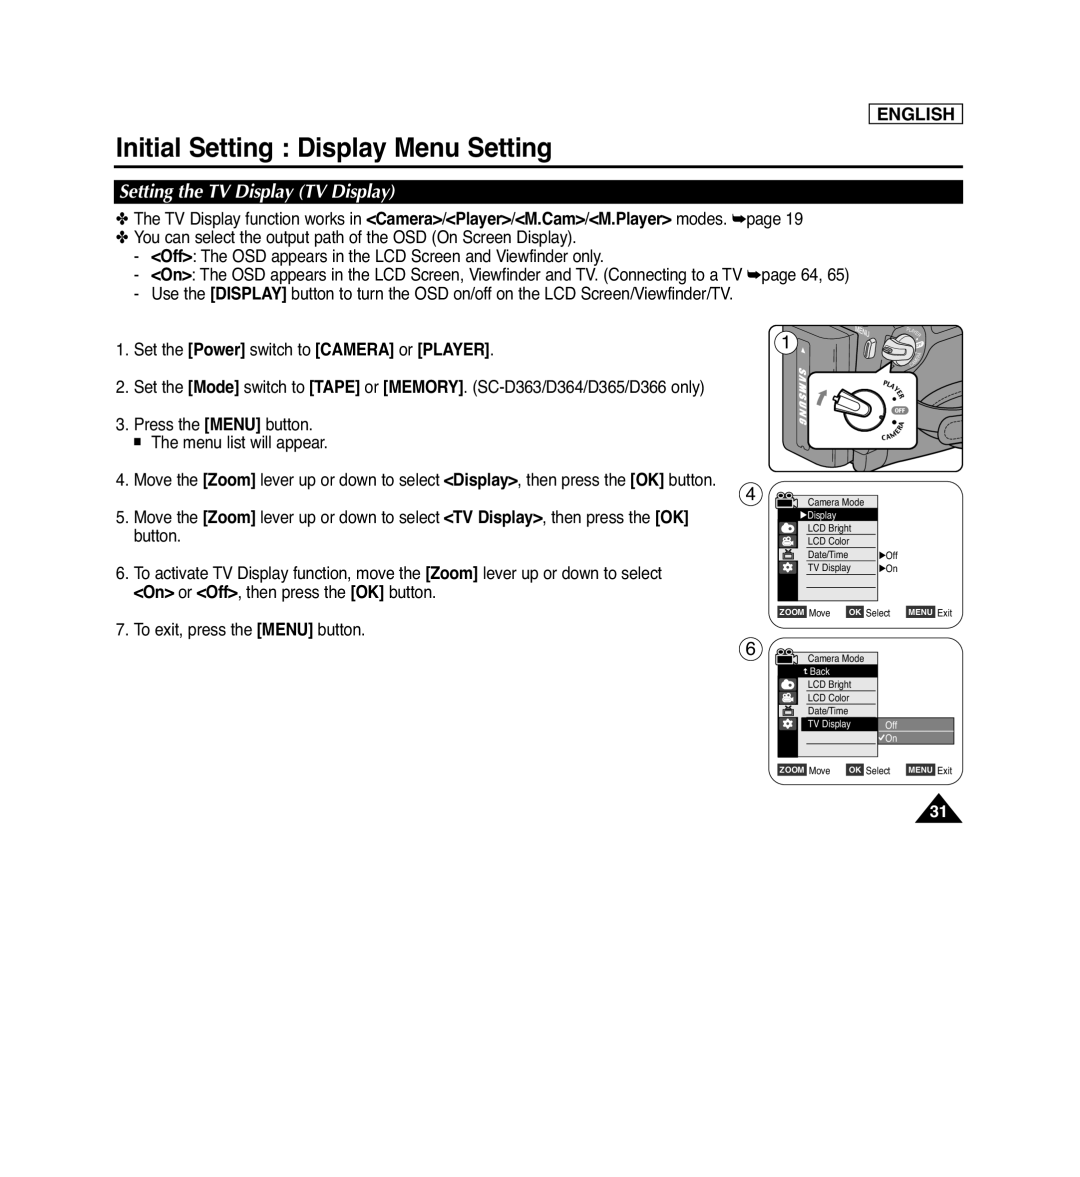 Samsung SC-D362, SC-D263, SC-D366, SC-D364 Setting the TV Display TV Display, Initial Setting Display Menu Setting, English 